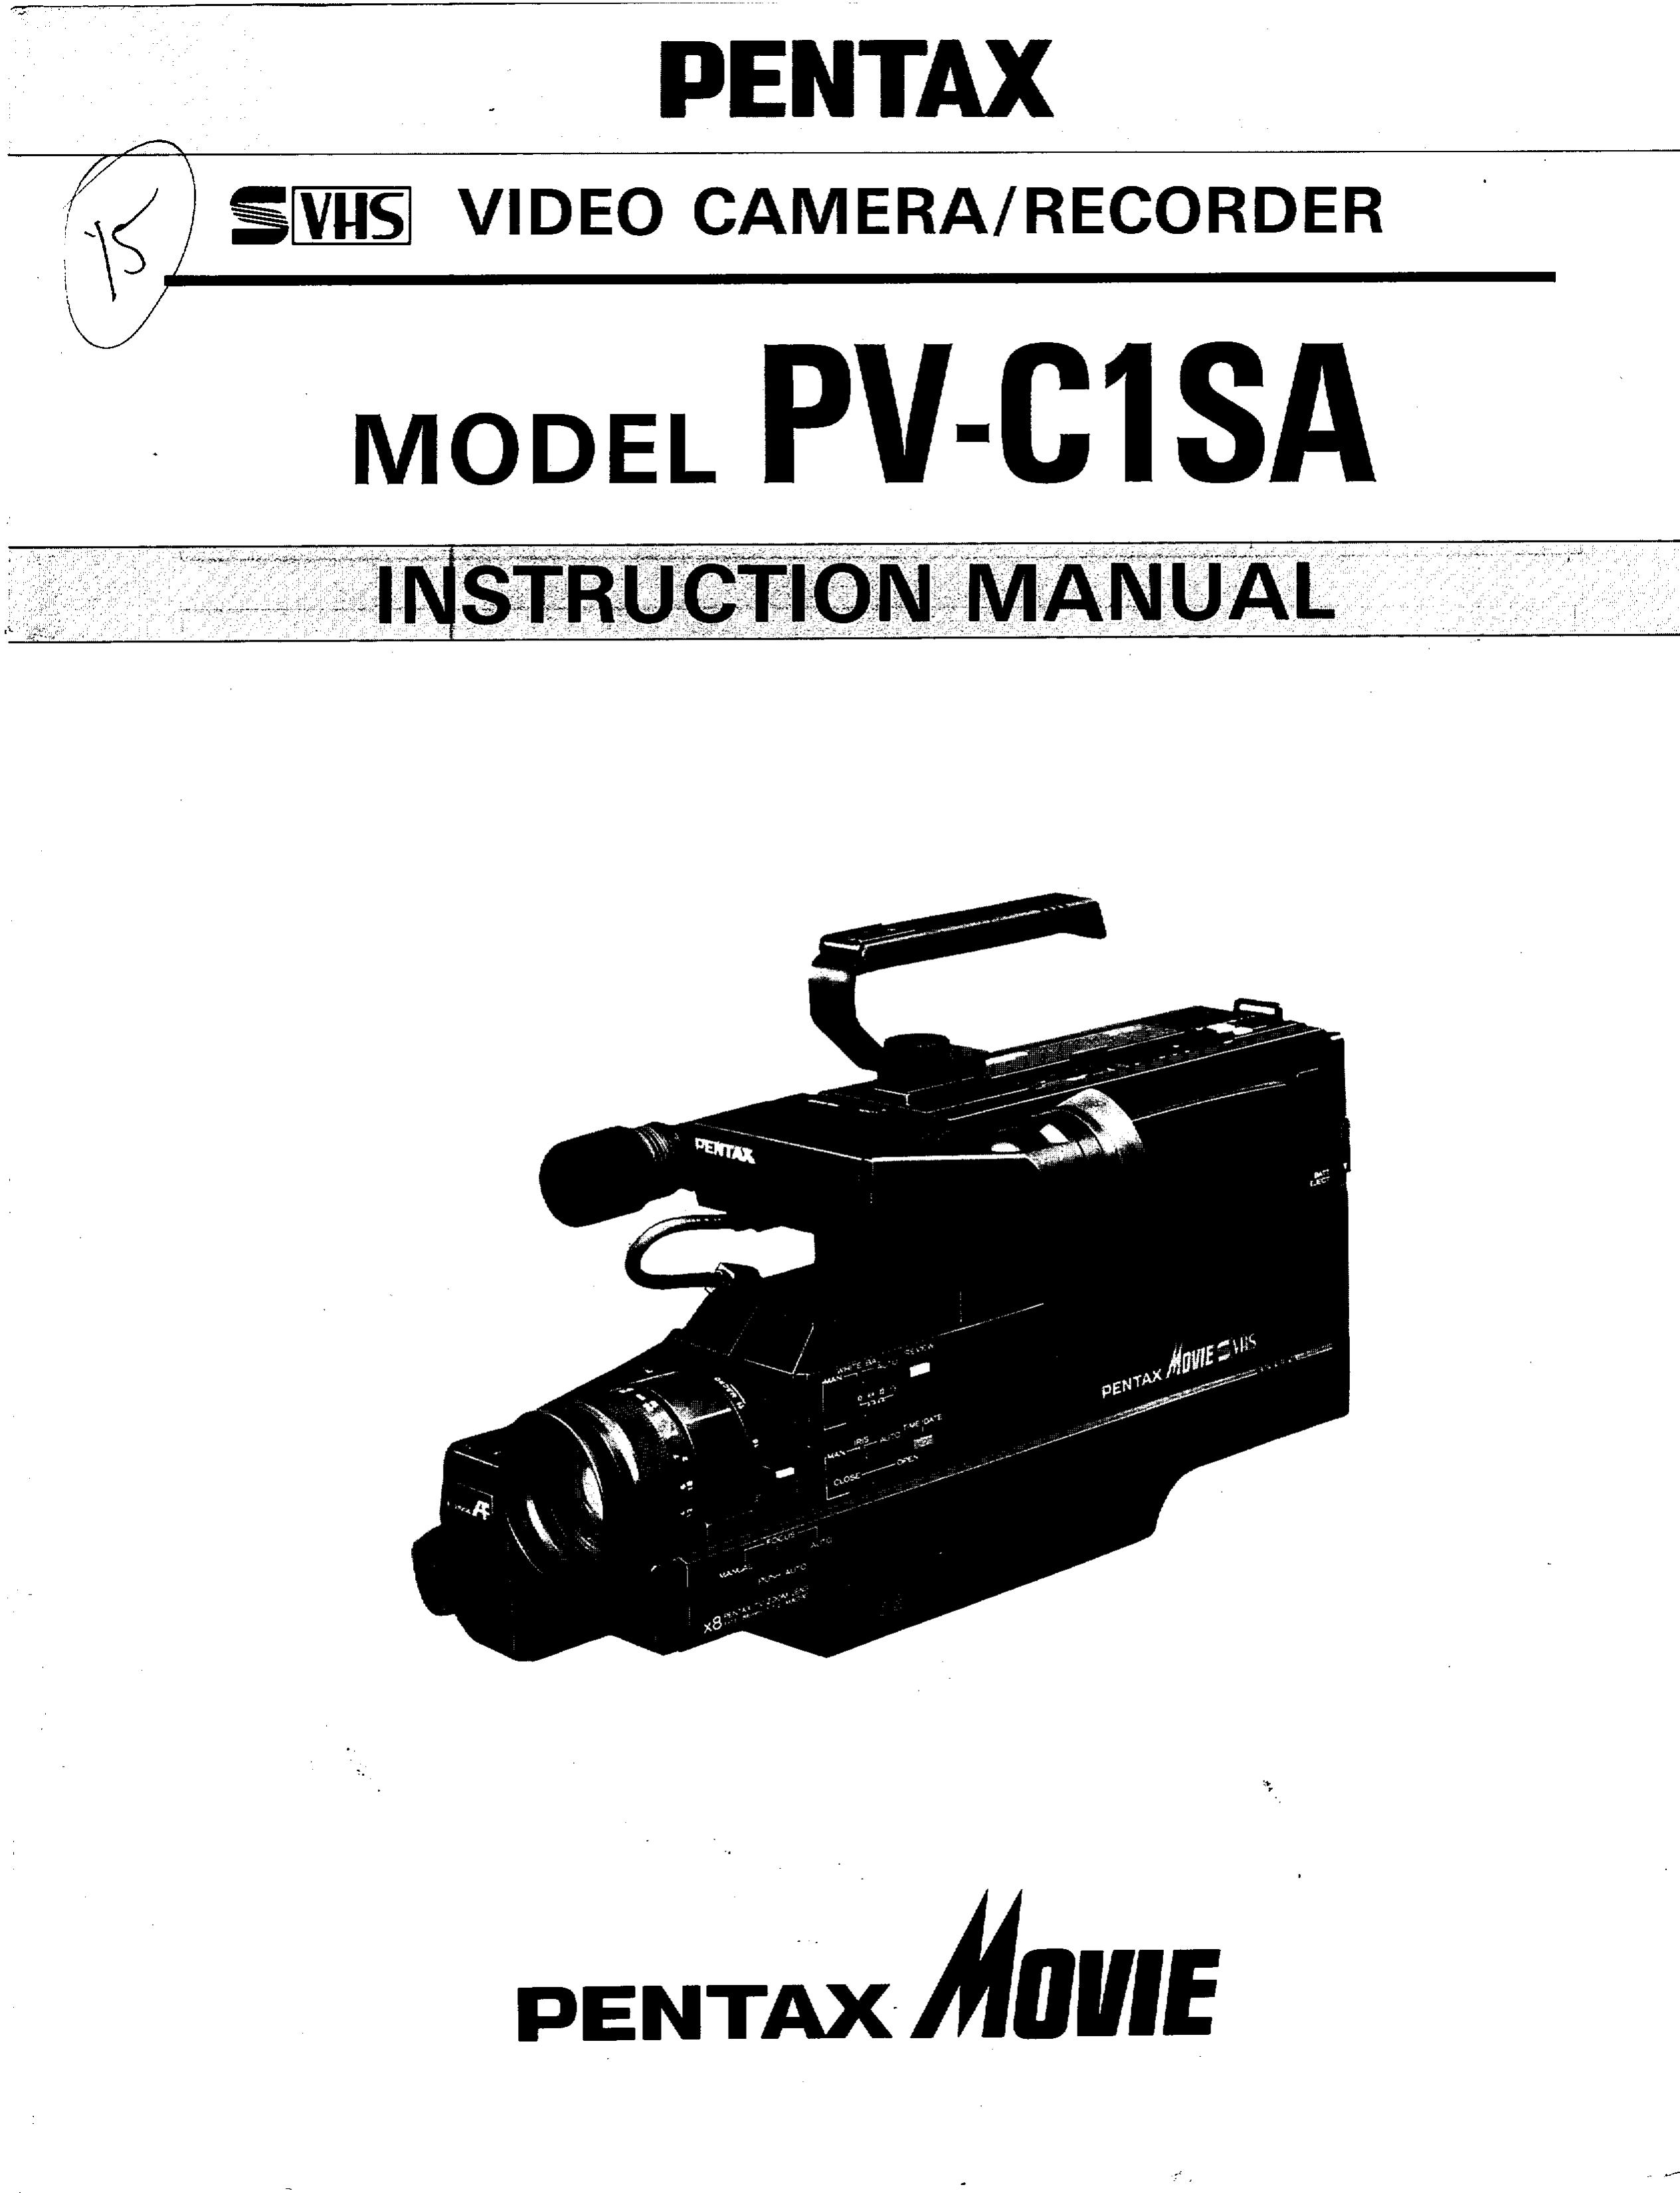 Pentax PV-C1SA Camcorder User Manual